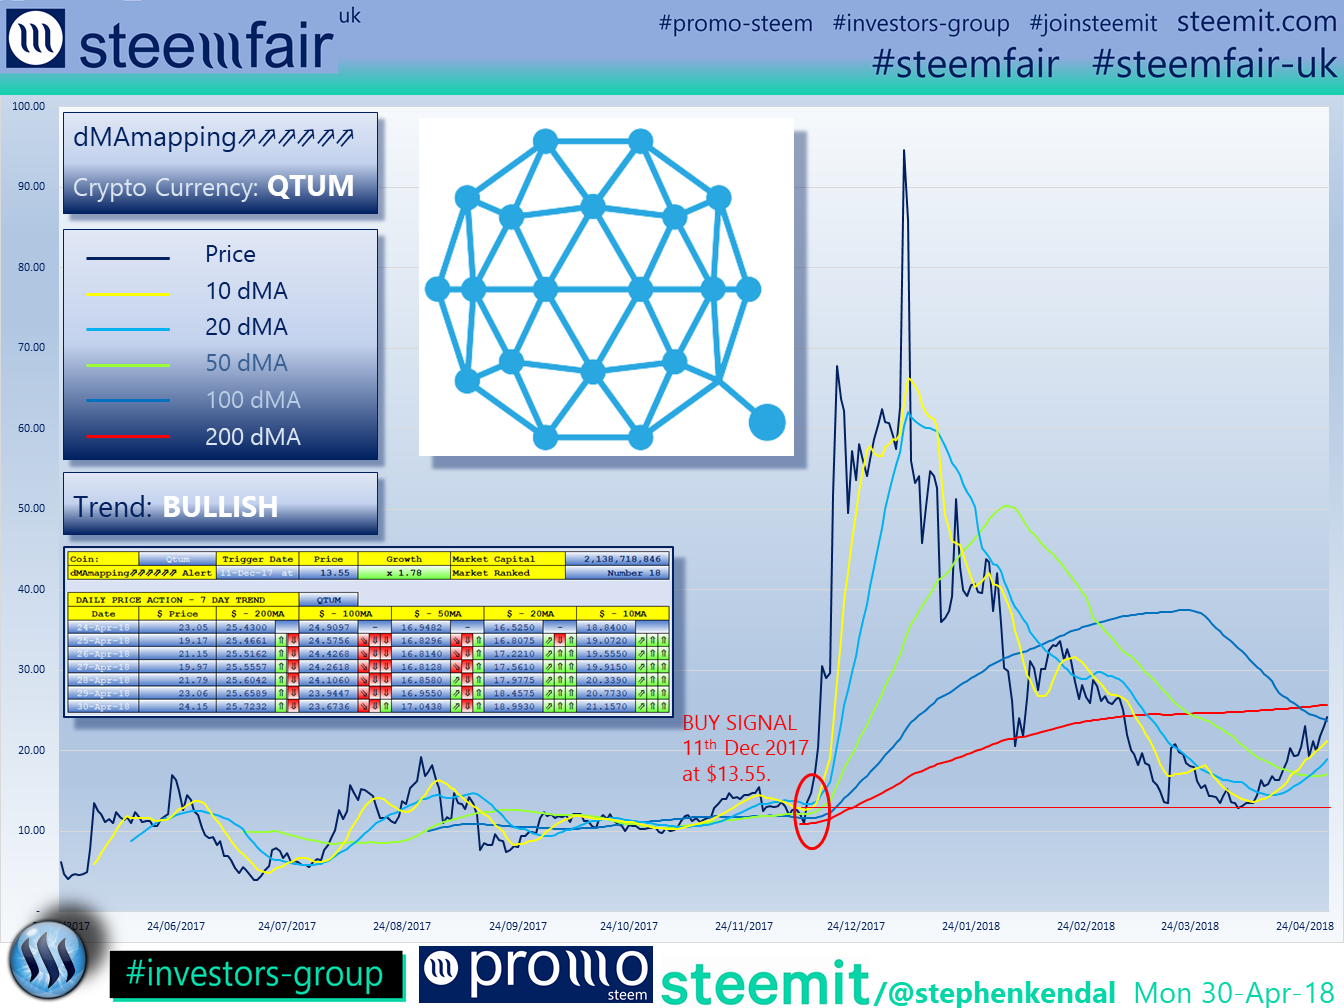 SteemFair SteemFair-uk Promo-Steem Investors-Group Qtum